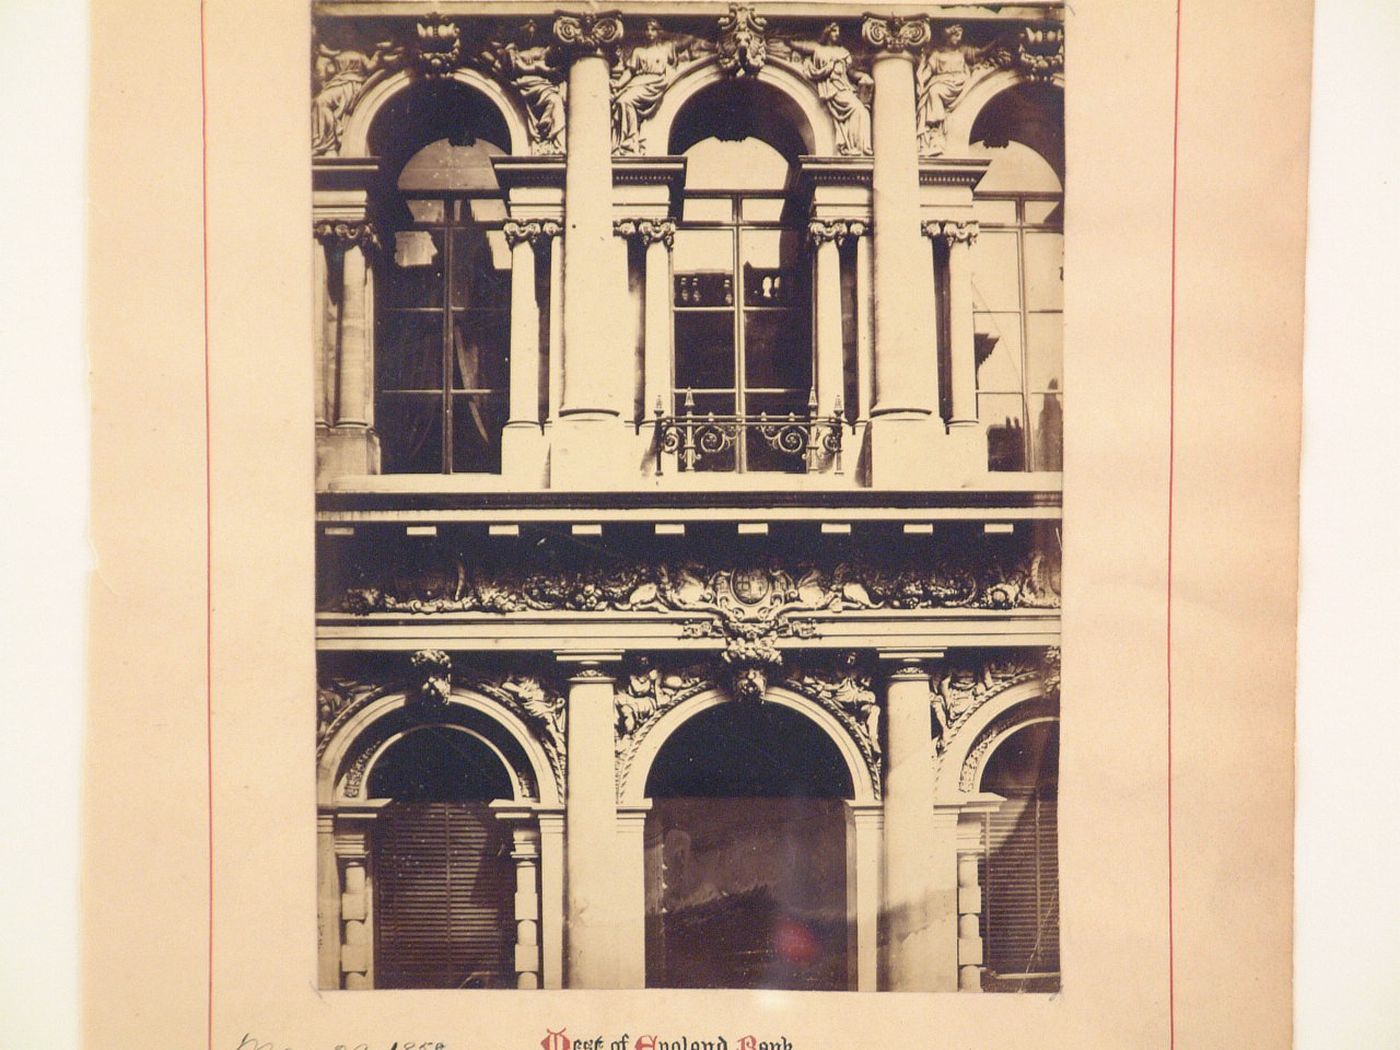 Detail of windows and façade, West of England Bank, England